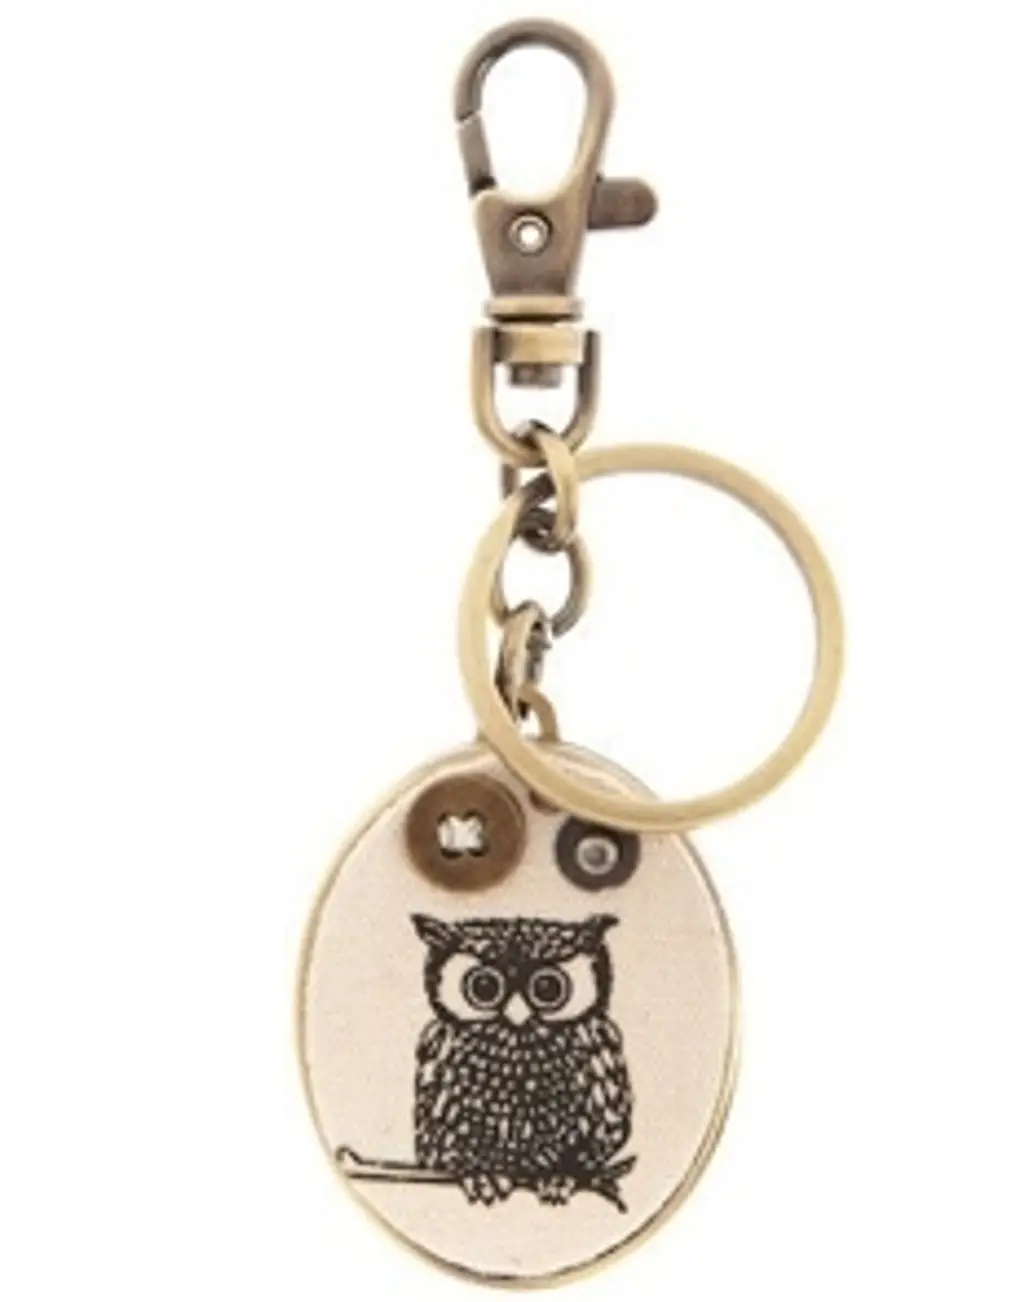 Modcloth Never Locked Owl-t Key Chain